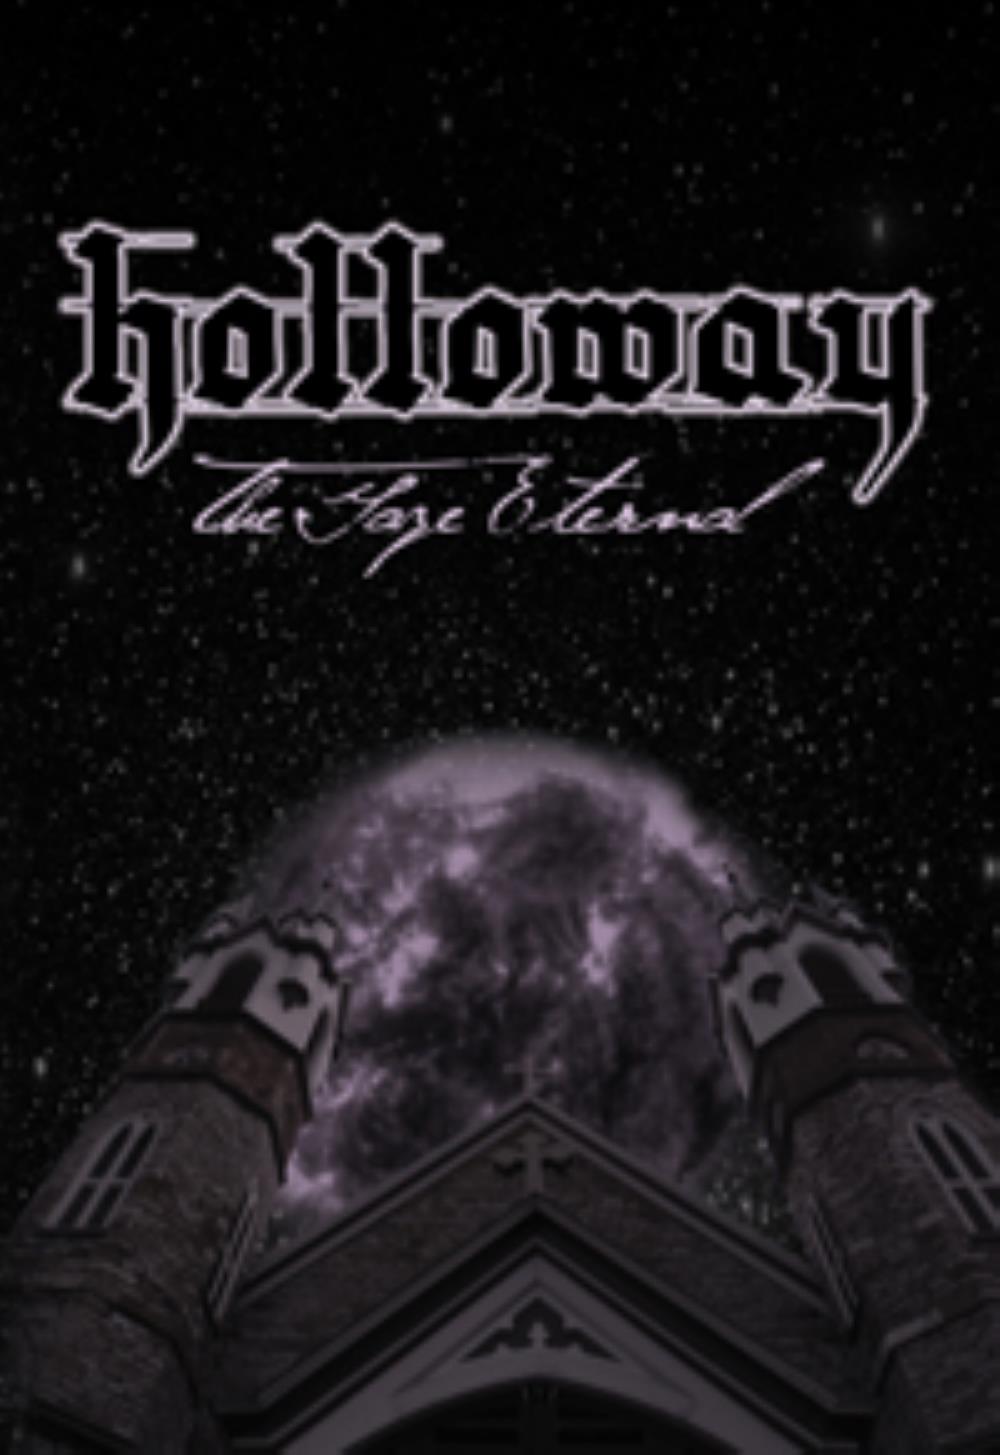 Holloway The Gaze Eternal album cover